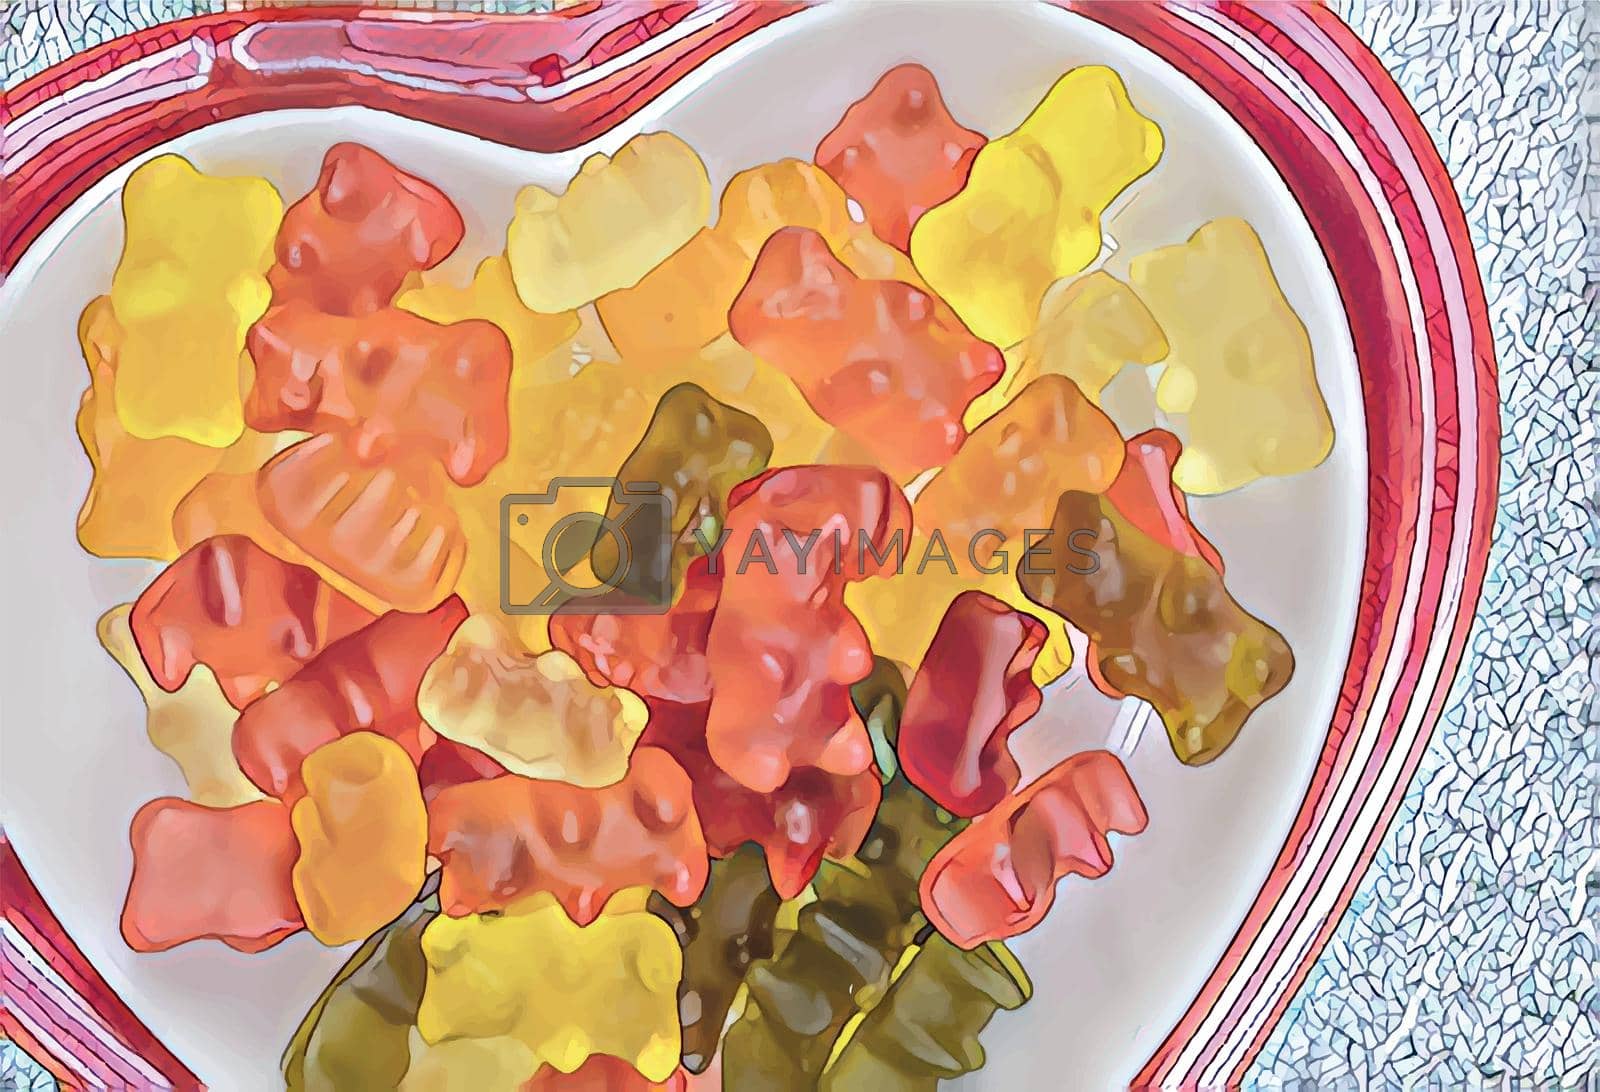 Royalty free image of teddy bear figured jelly beans by yilmazsavaskandag